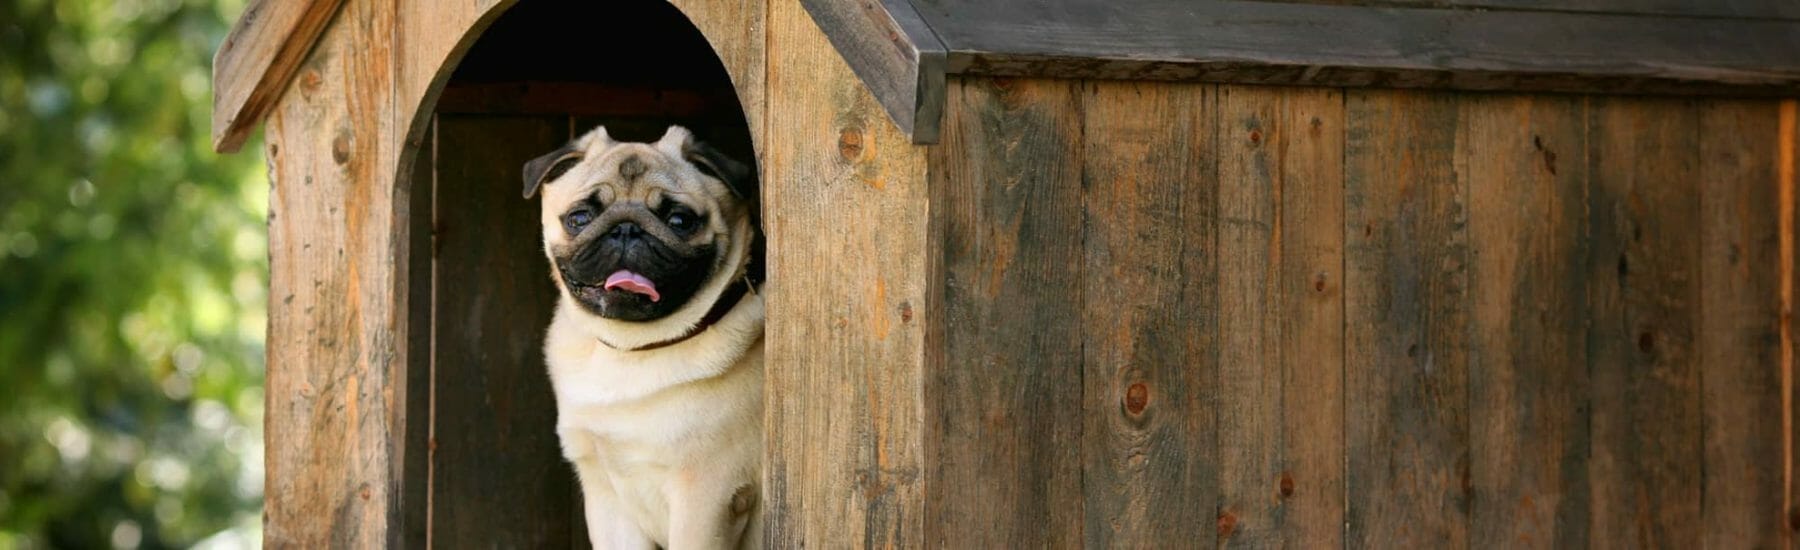 Pug sitting inside of a dog house